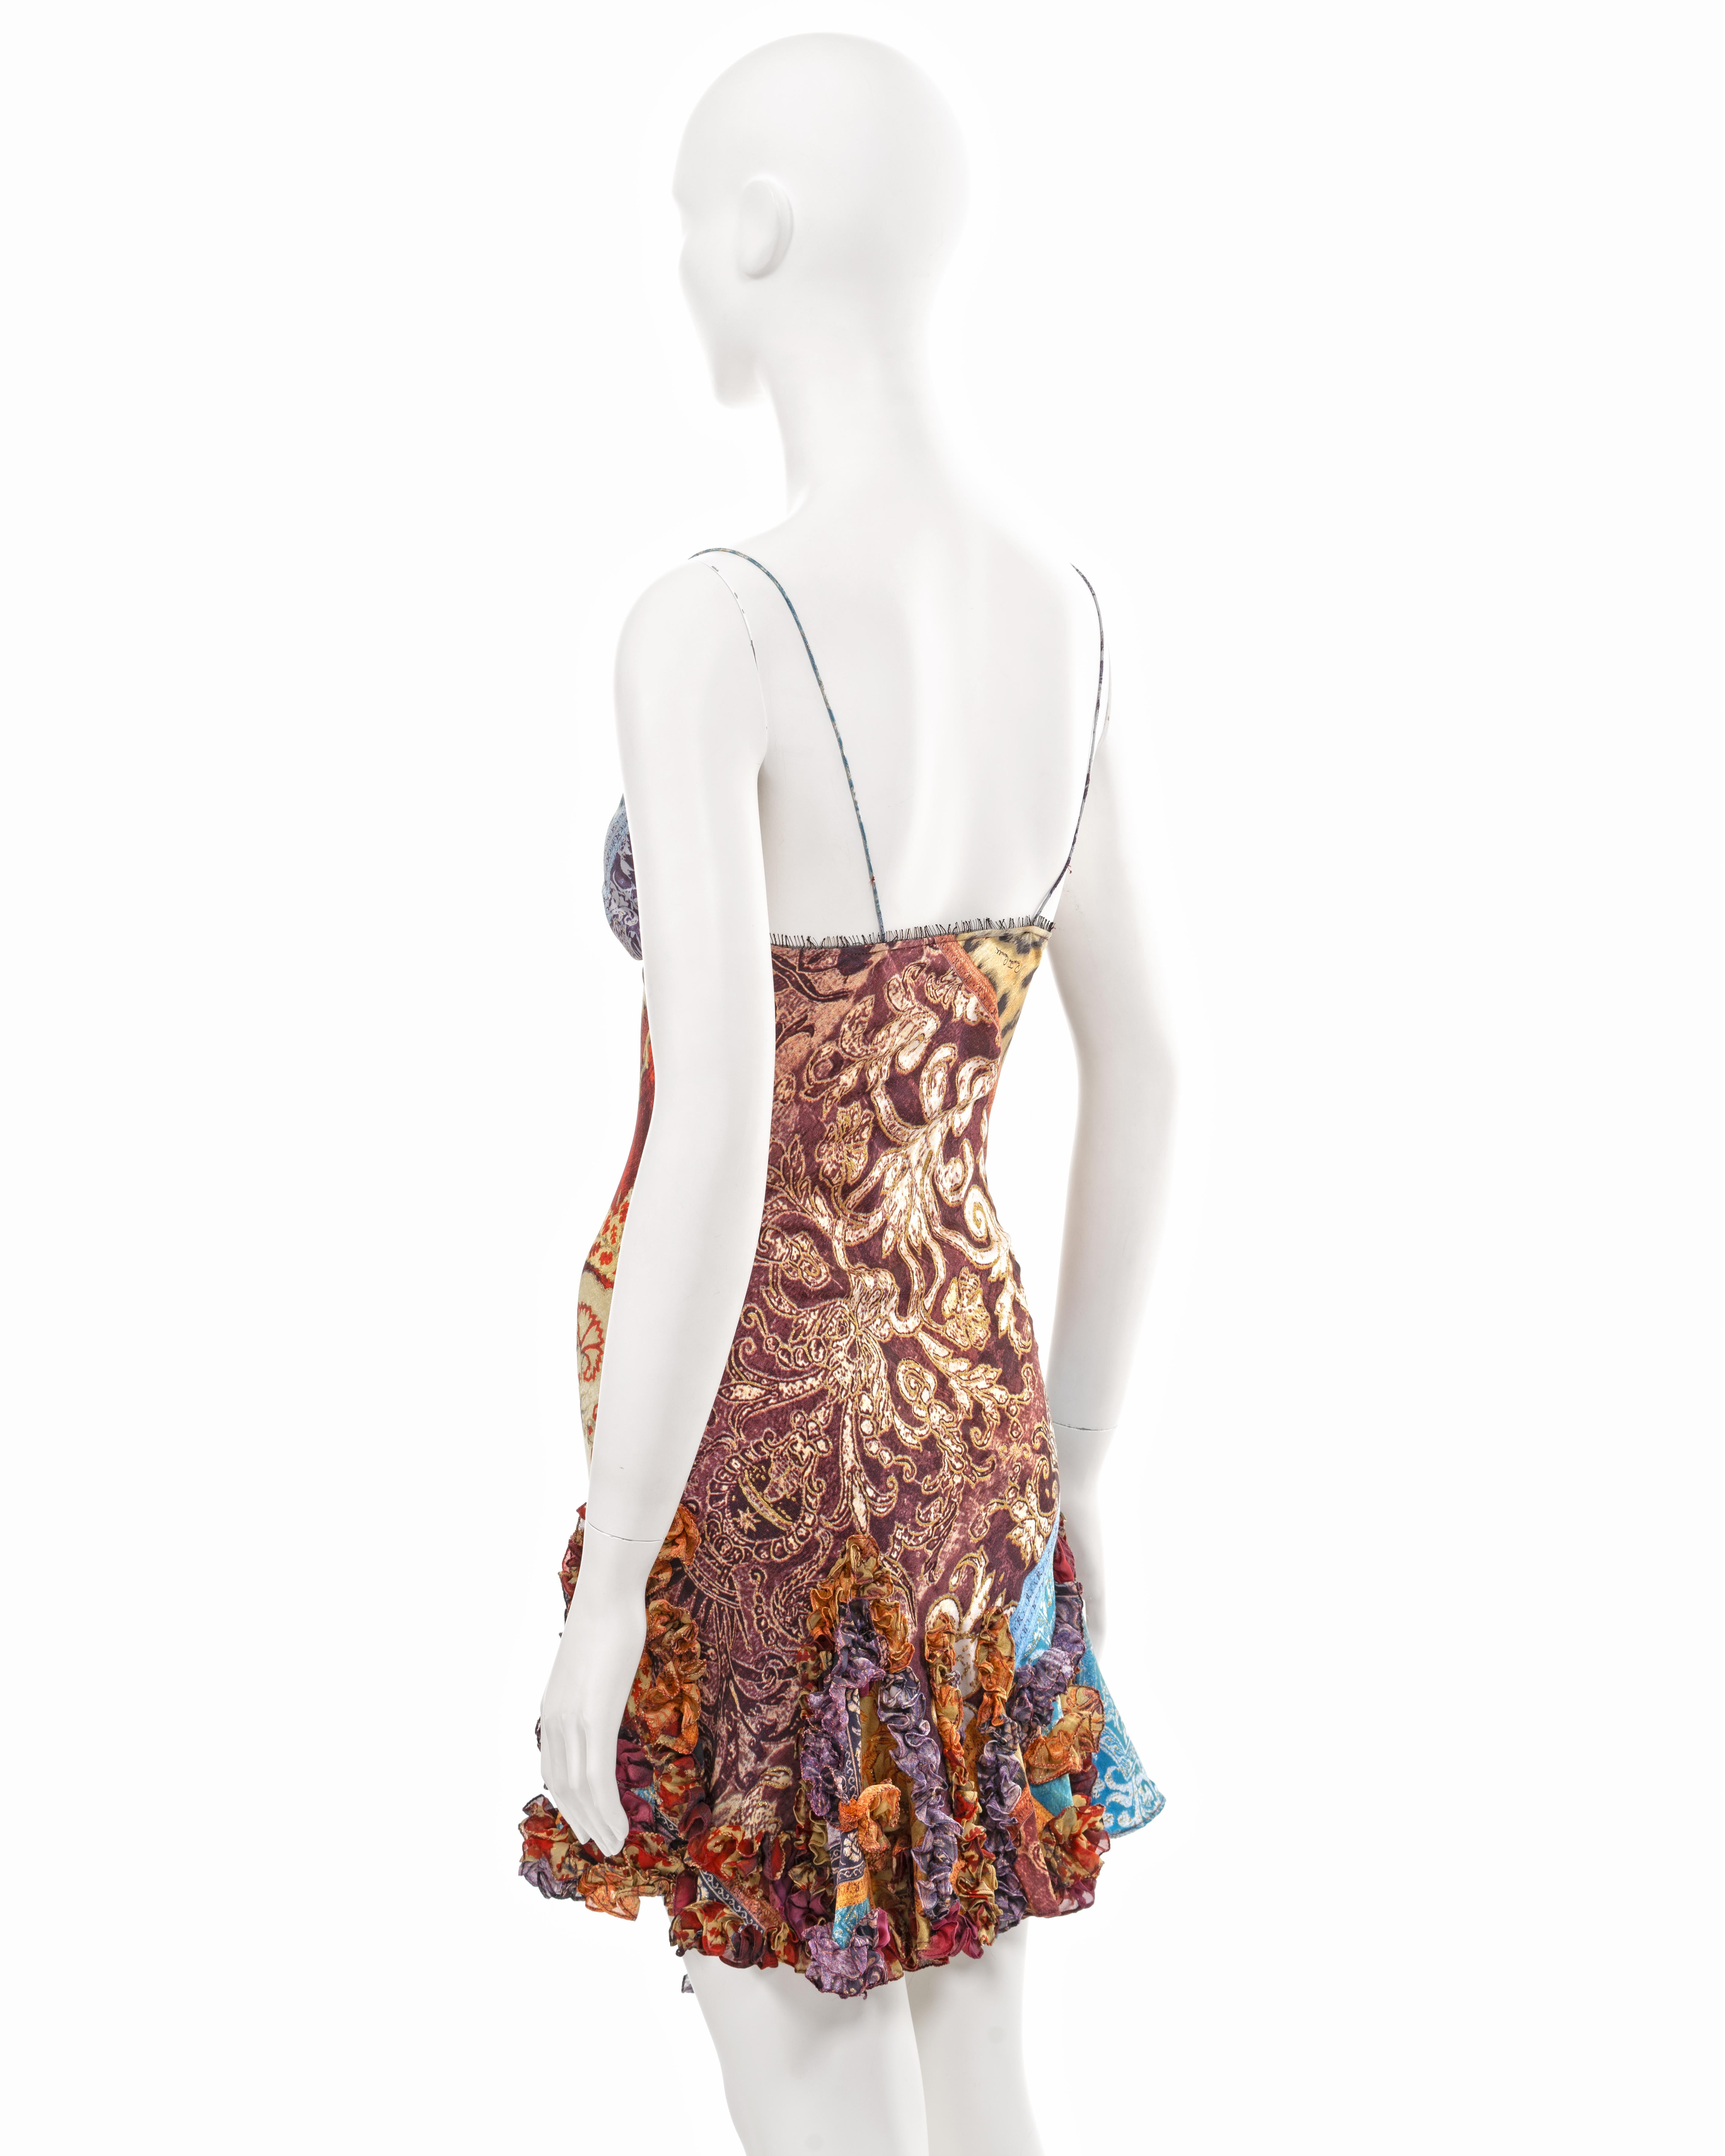 Roberto Cavalli brocade printed silk evening dress with ruffled skirt, fw 2004 For Sale 6